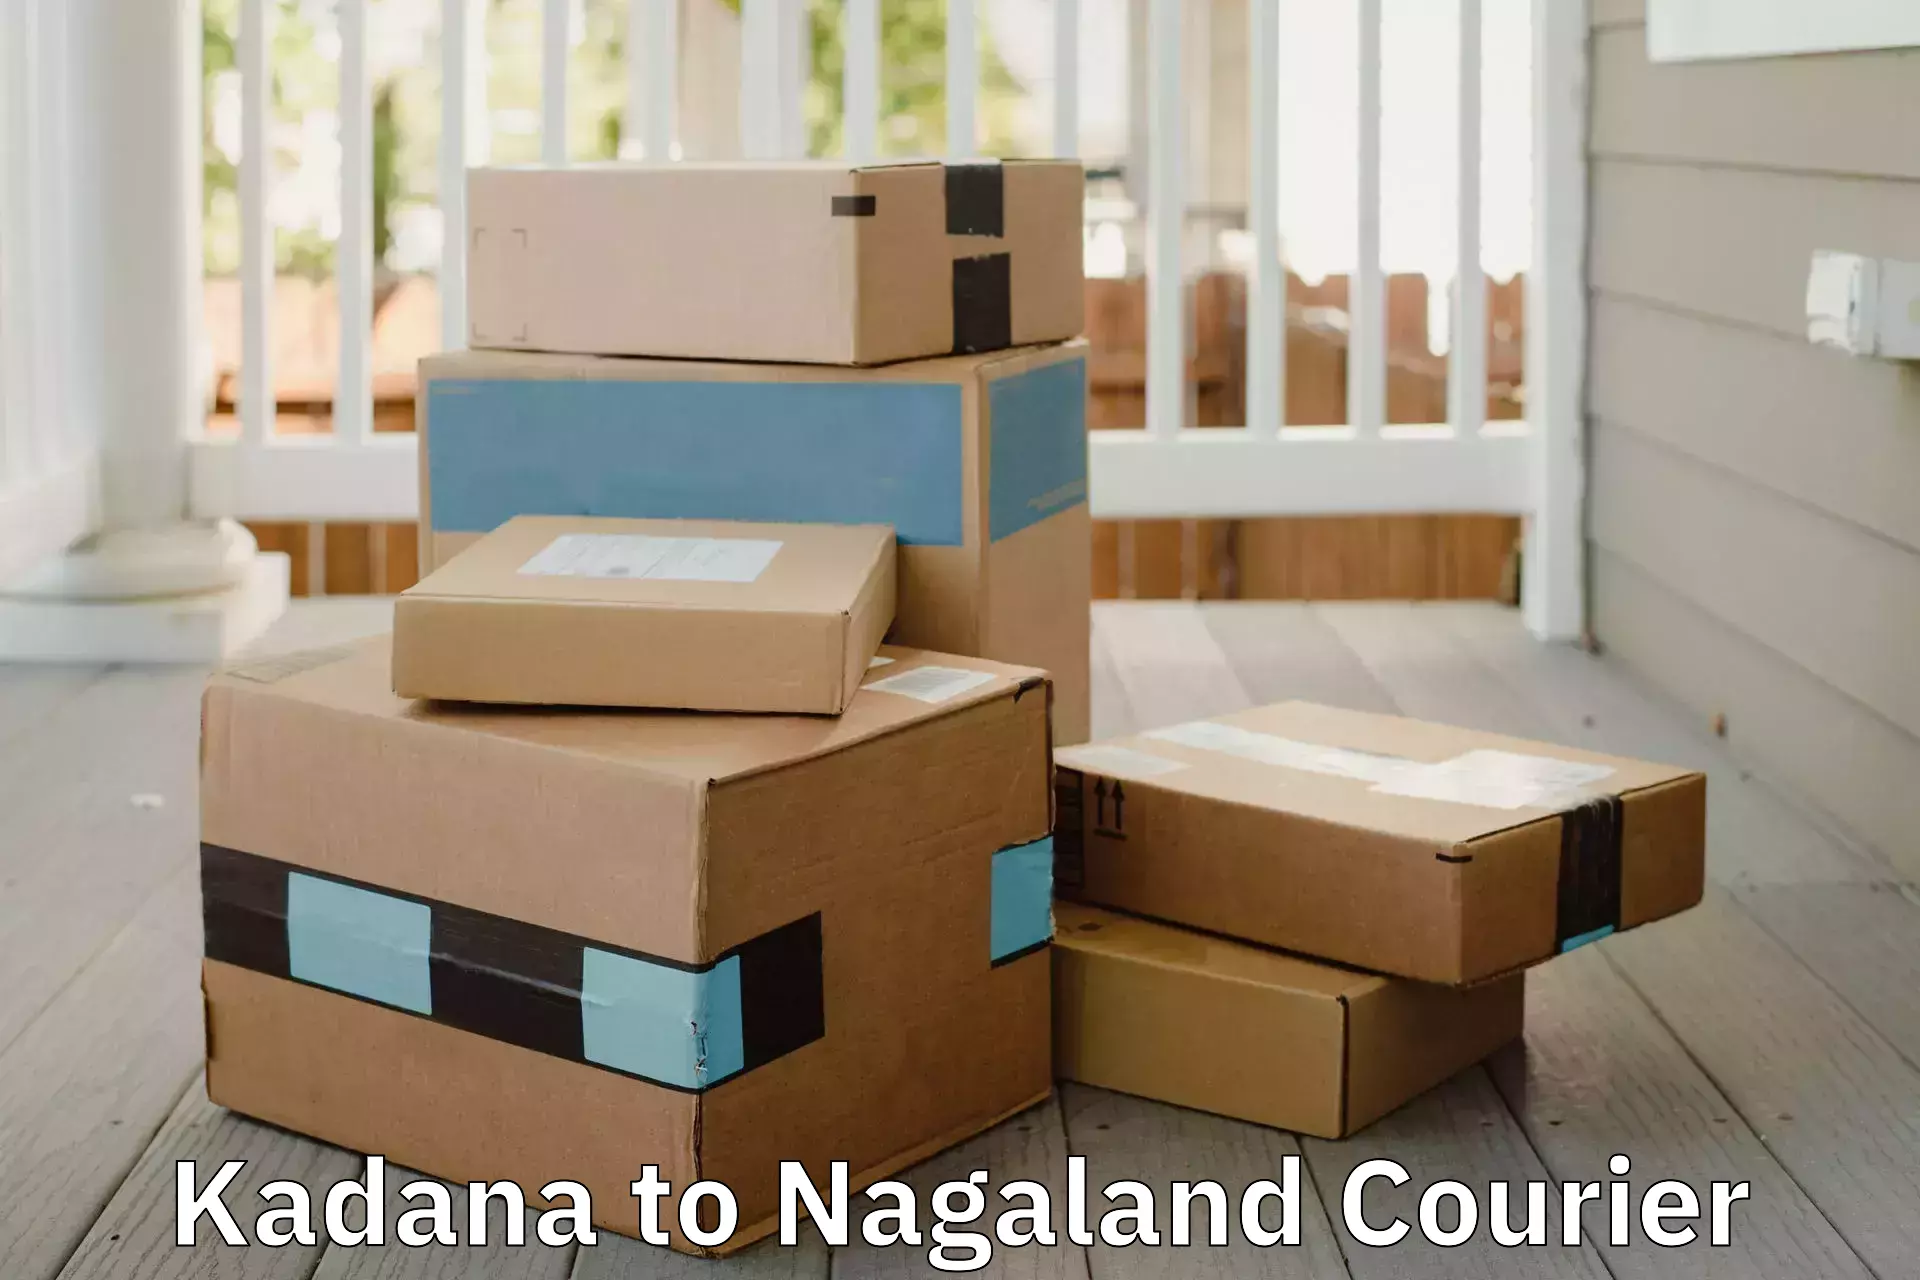 Professional moving company Kadana to Nagaland